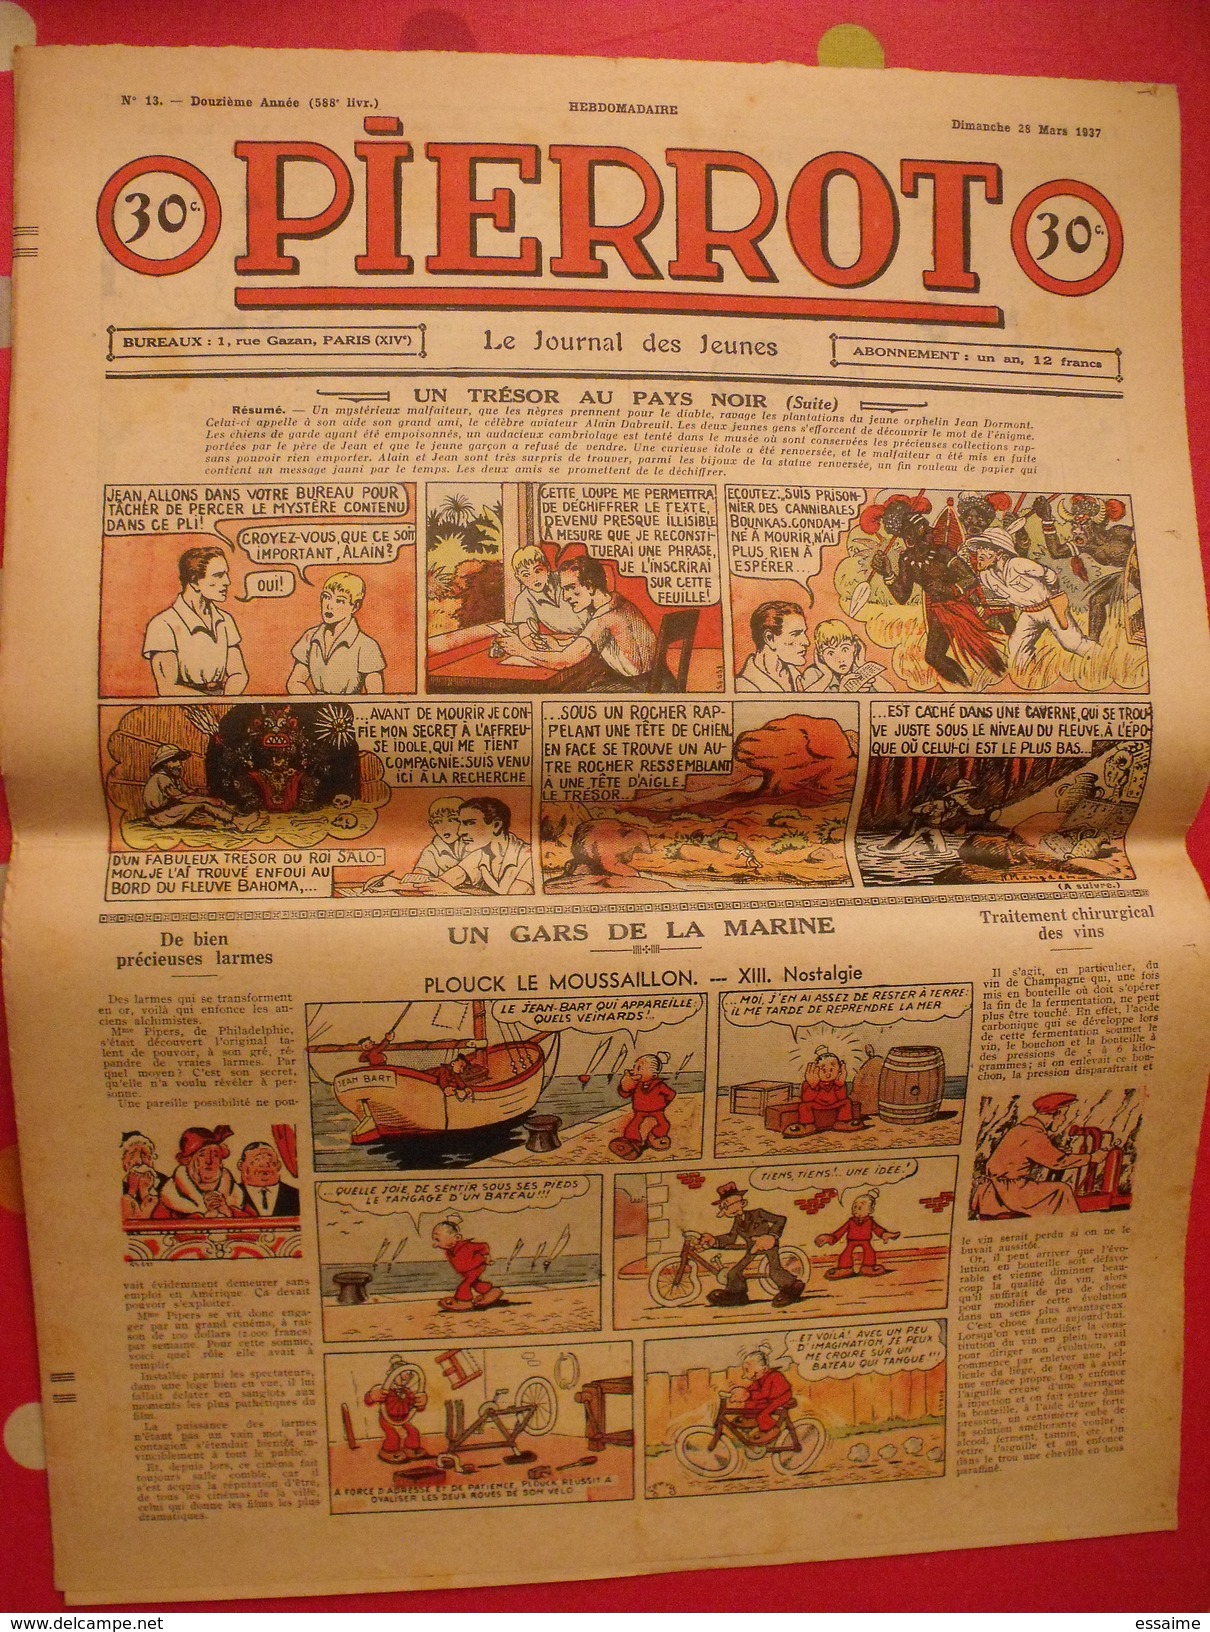 Pierrot  12 n° de 1937. plouck de gervy, costo de marijac jeanjean marine aviation ferran le rallic mengden